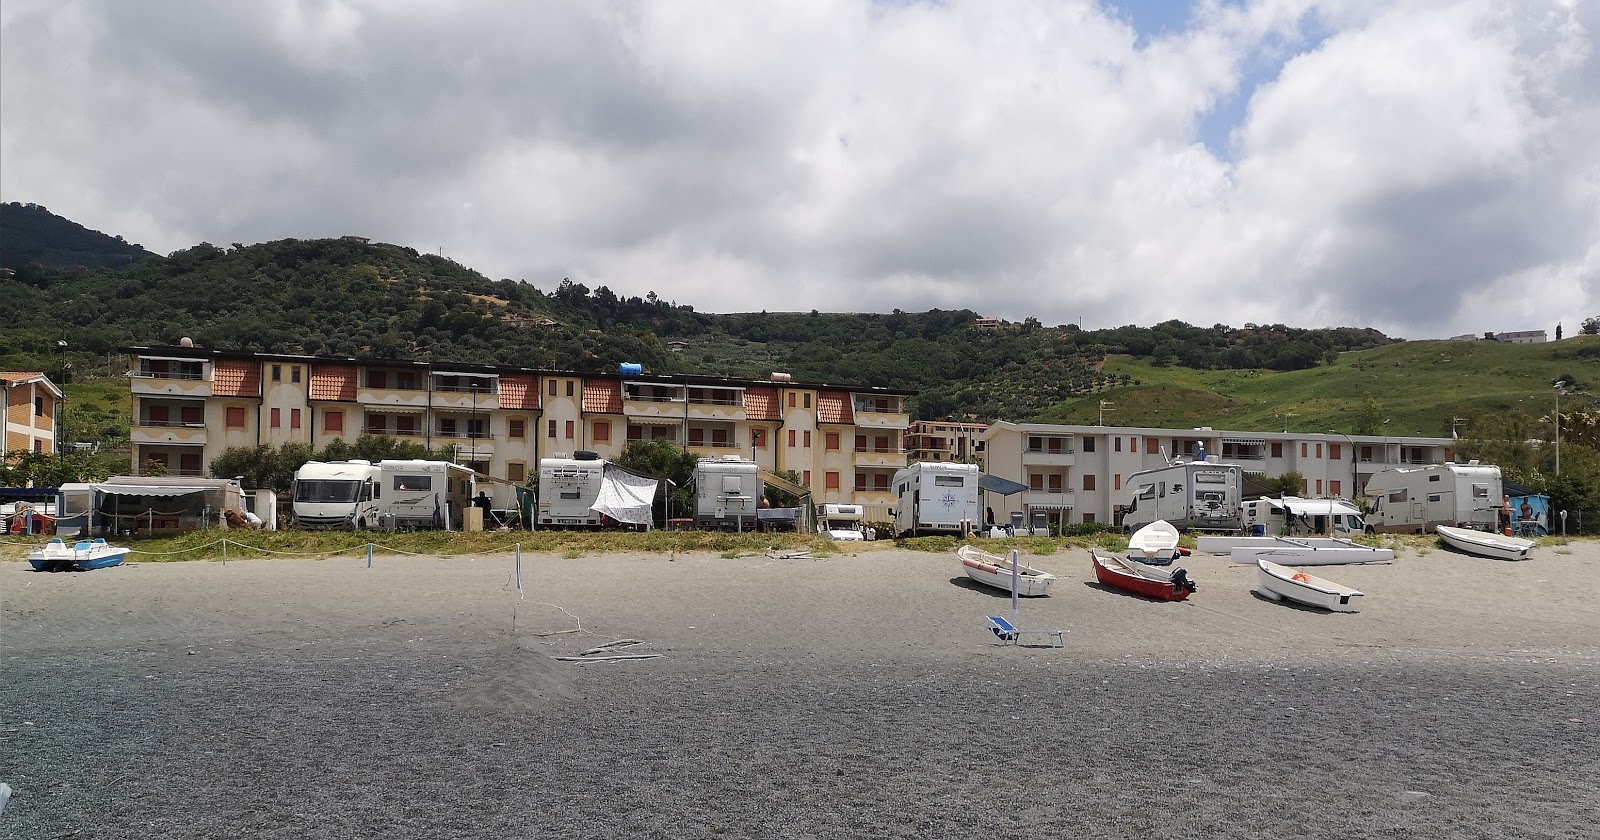 Fotografie cu Cartolano beach cu nivelul de curățenie in medie